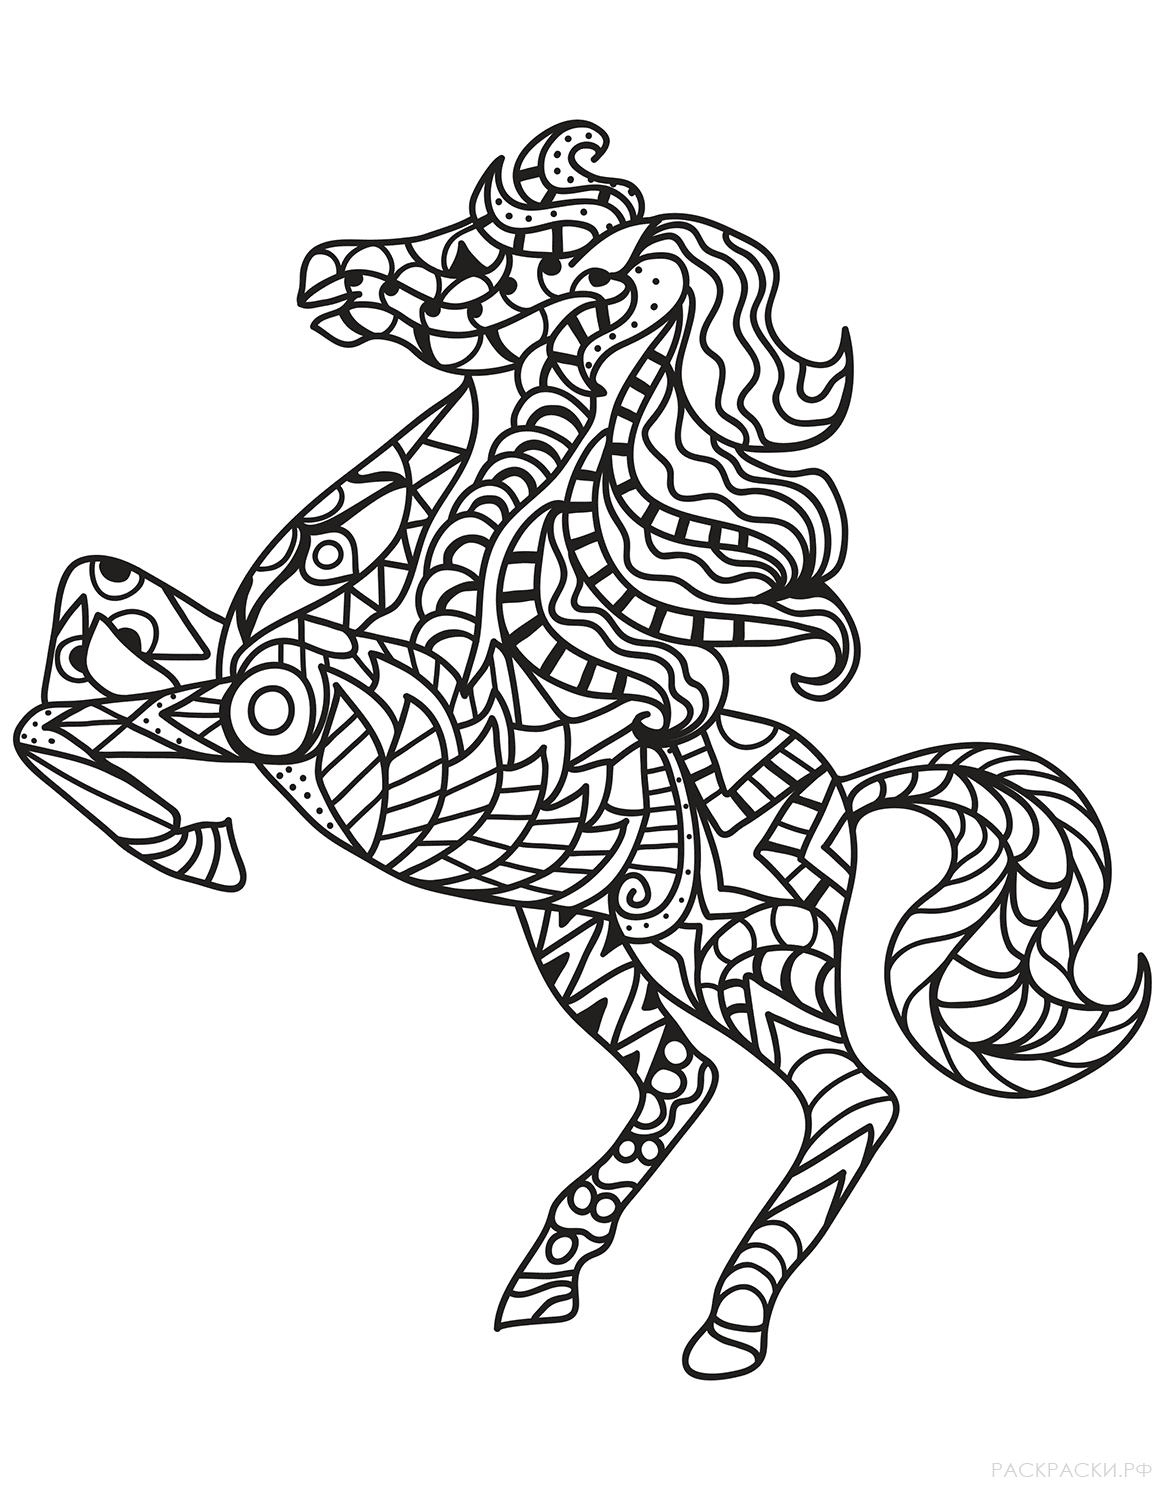 Раскраска Лошадь на дыбах в технике дзентангл